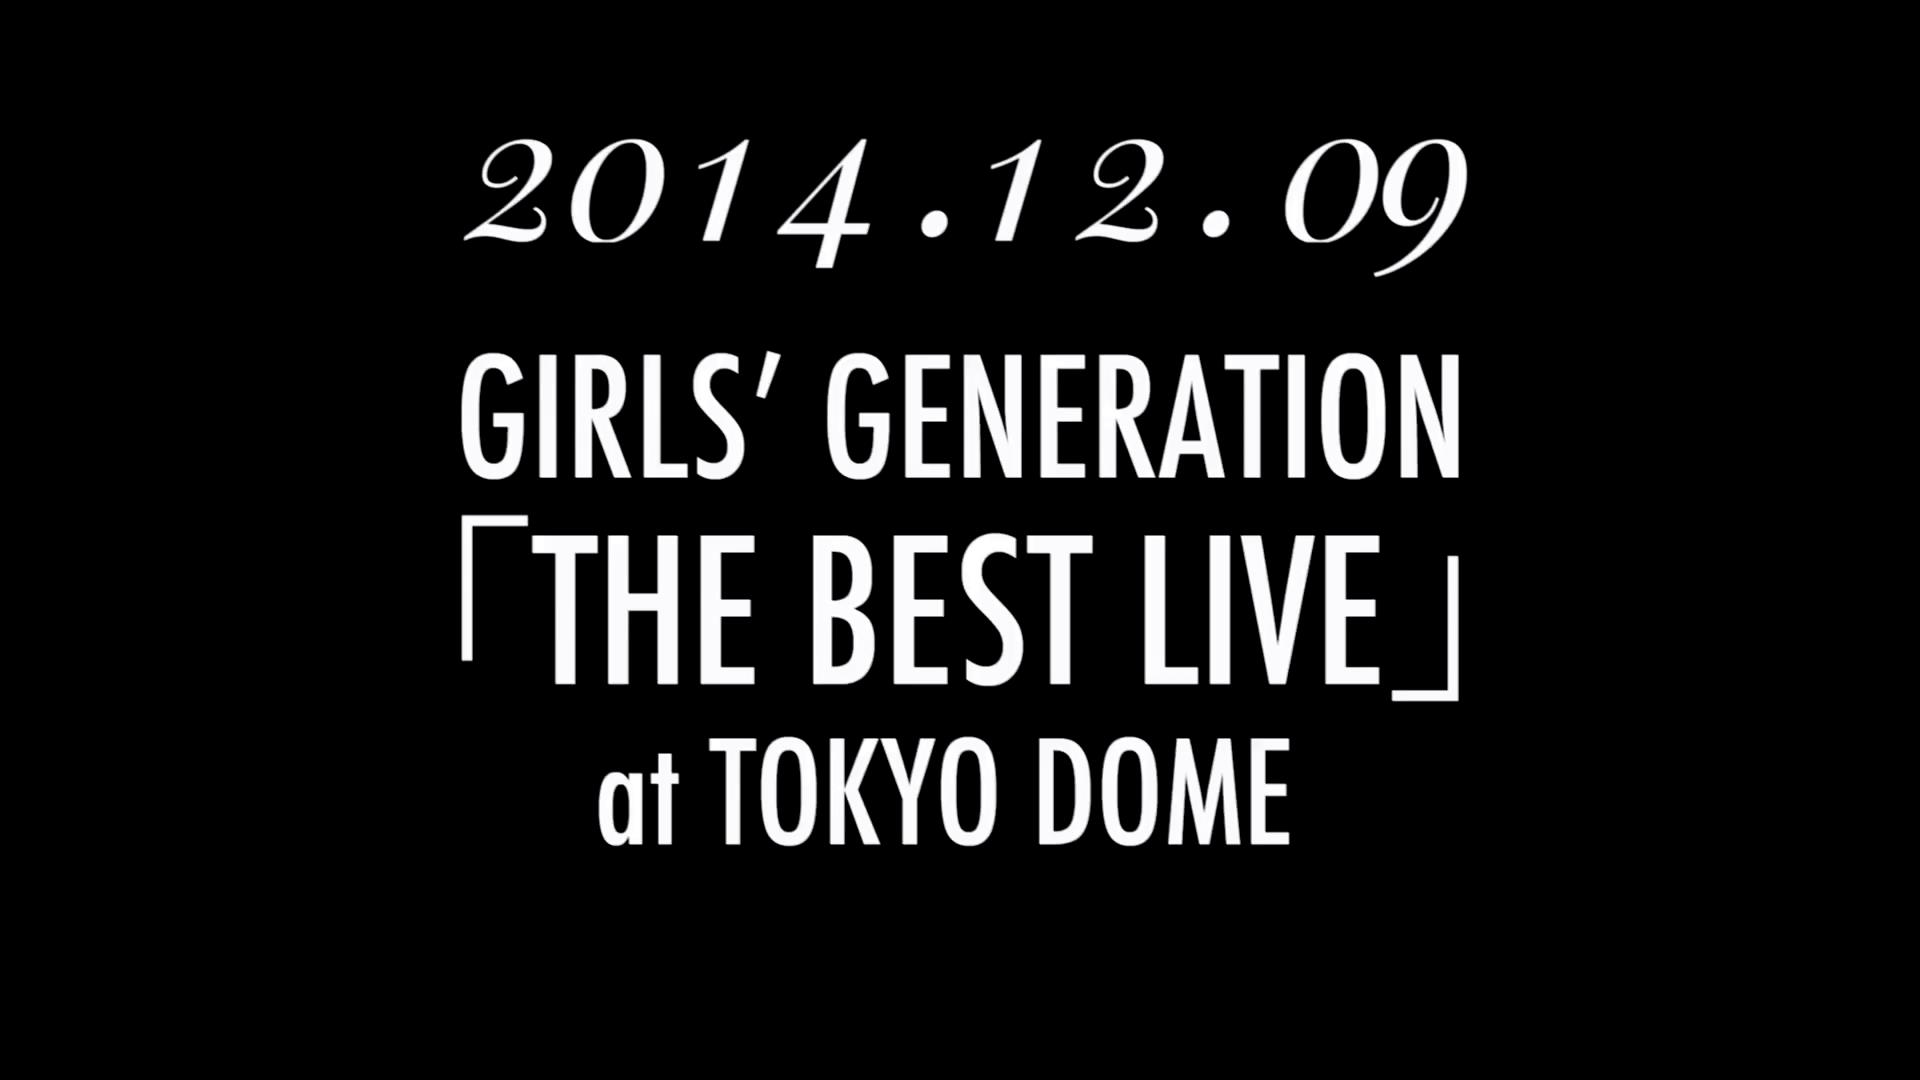 Girls' Generation anuncia "THE BEST LIVE" en  Tokyo Dome el 9 de Diciembre Thebestlive